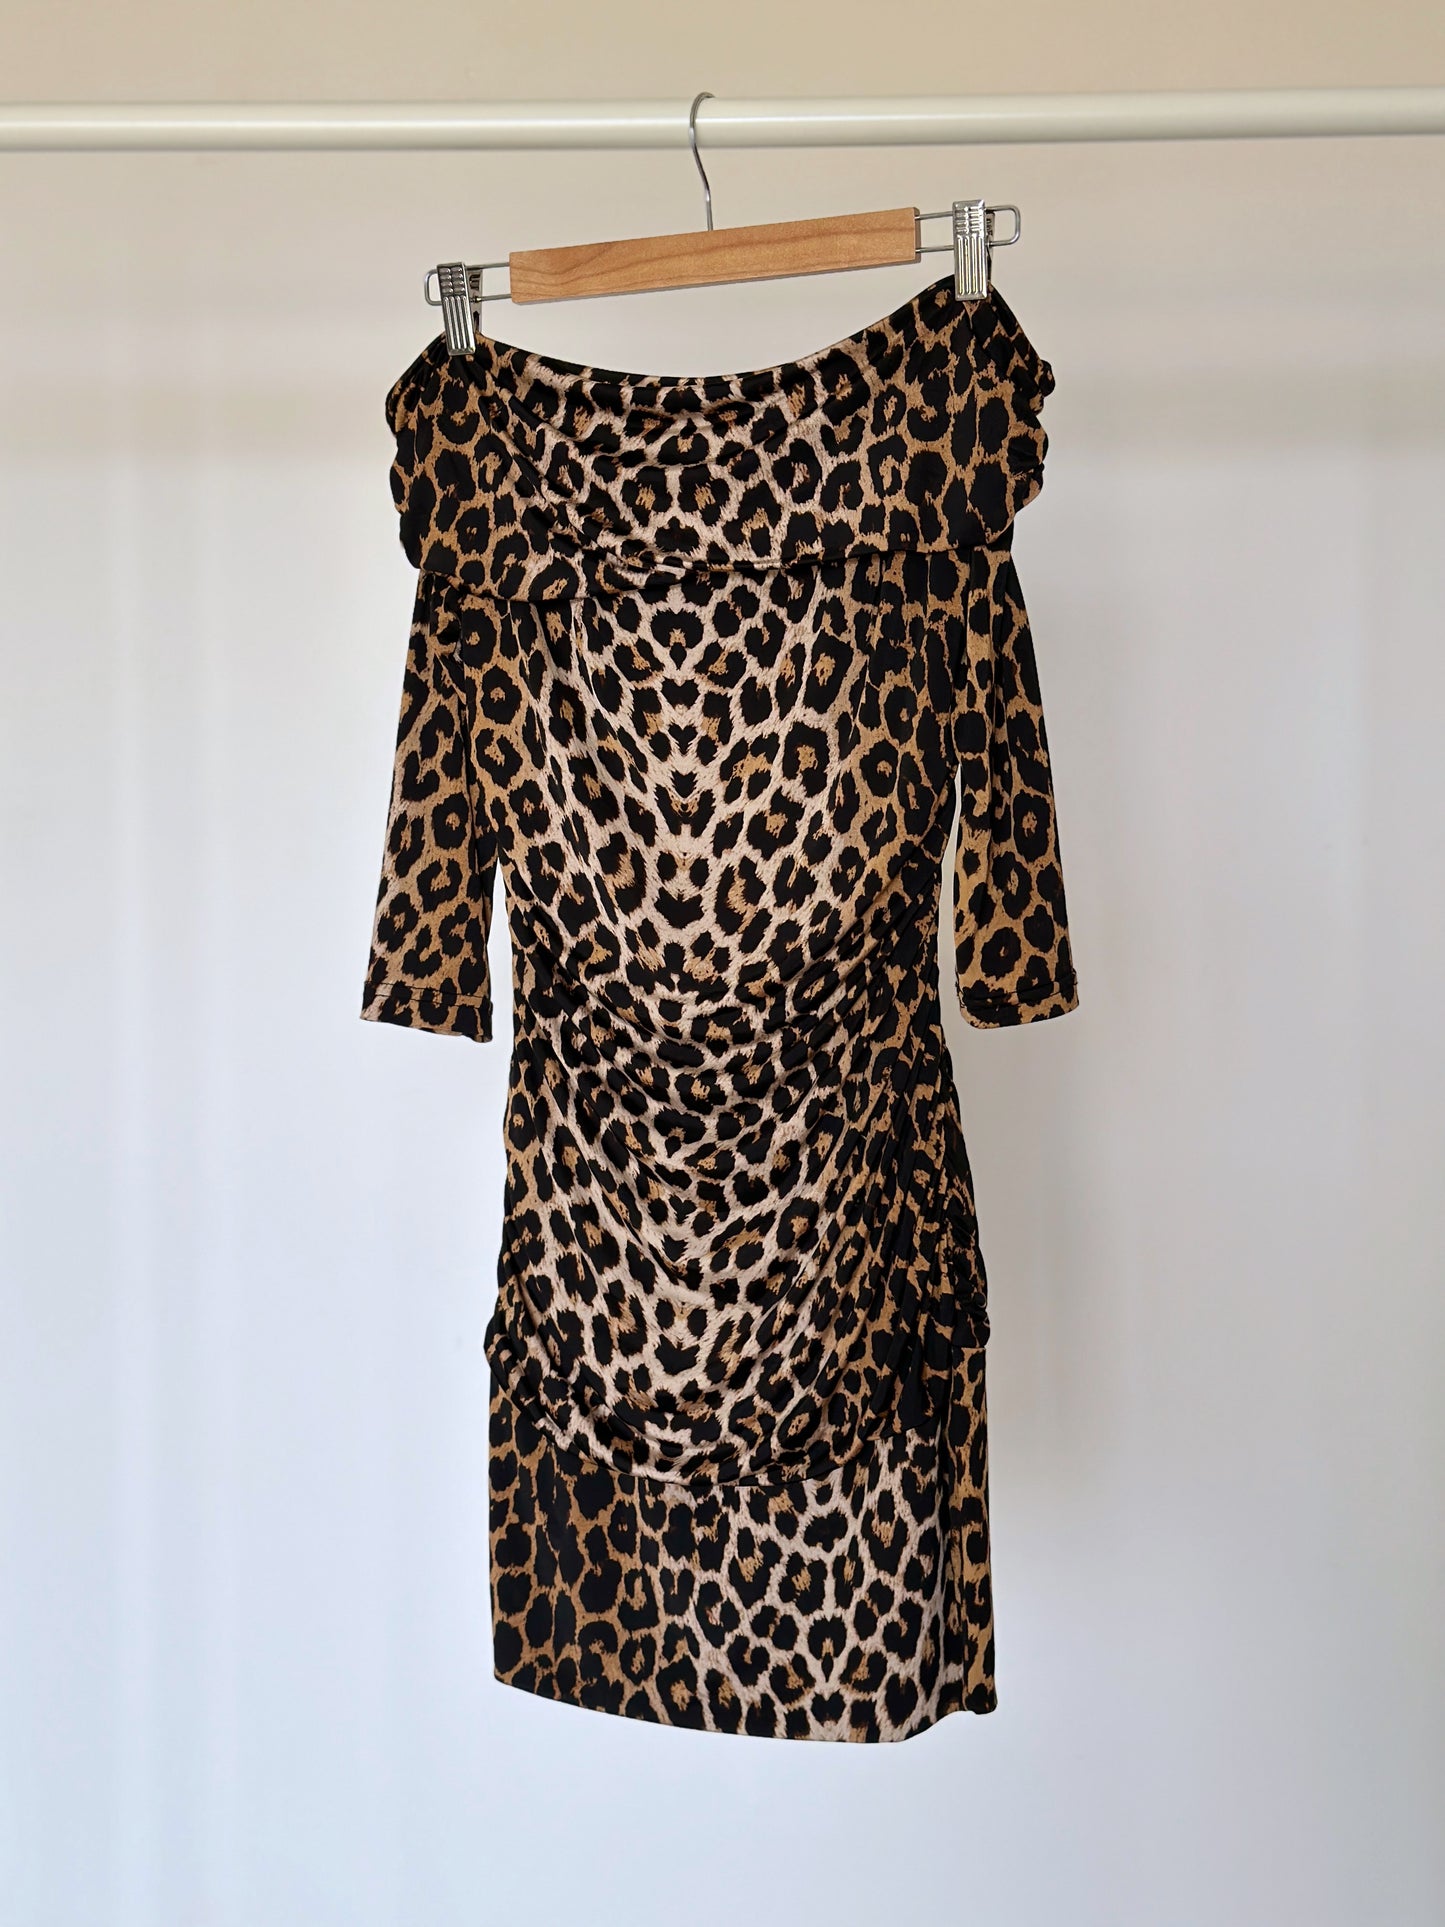 Mini leopard off-the-shoulder dress